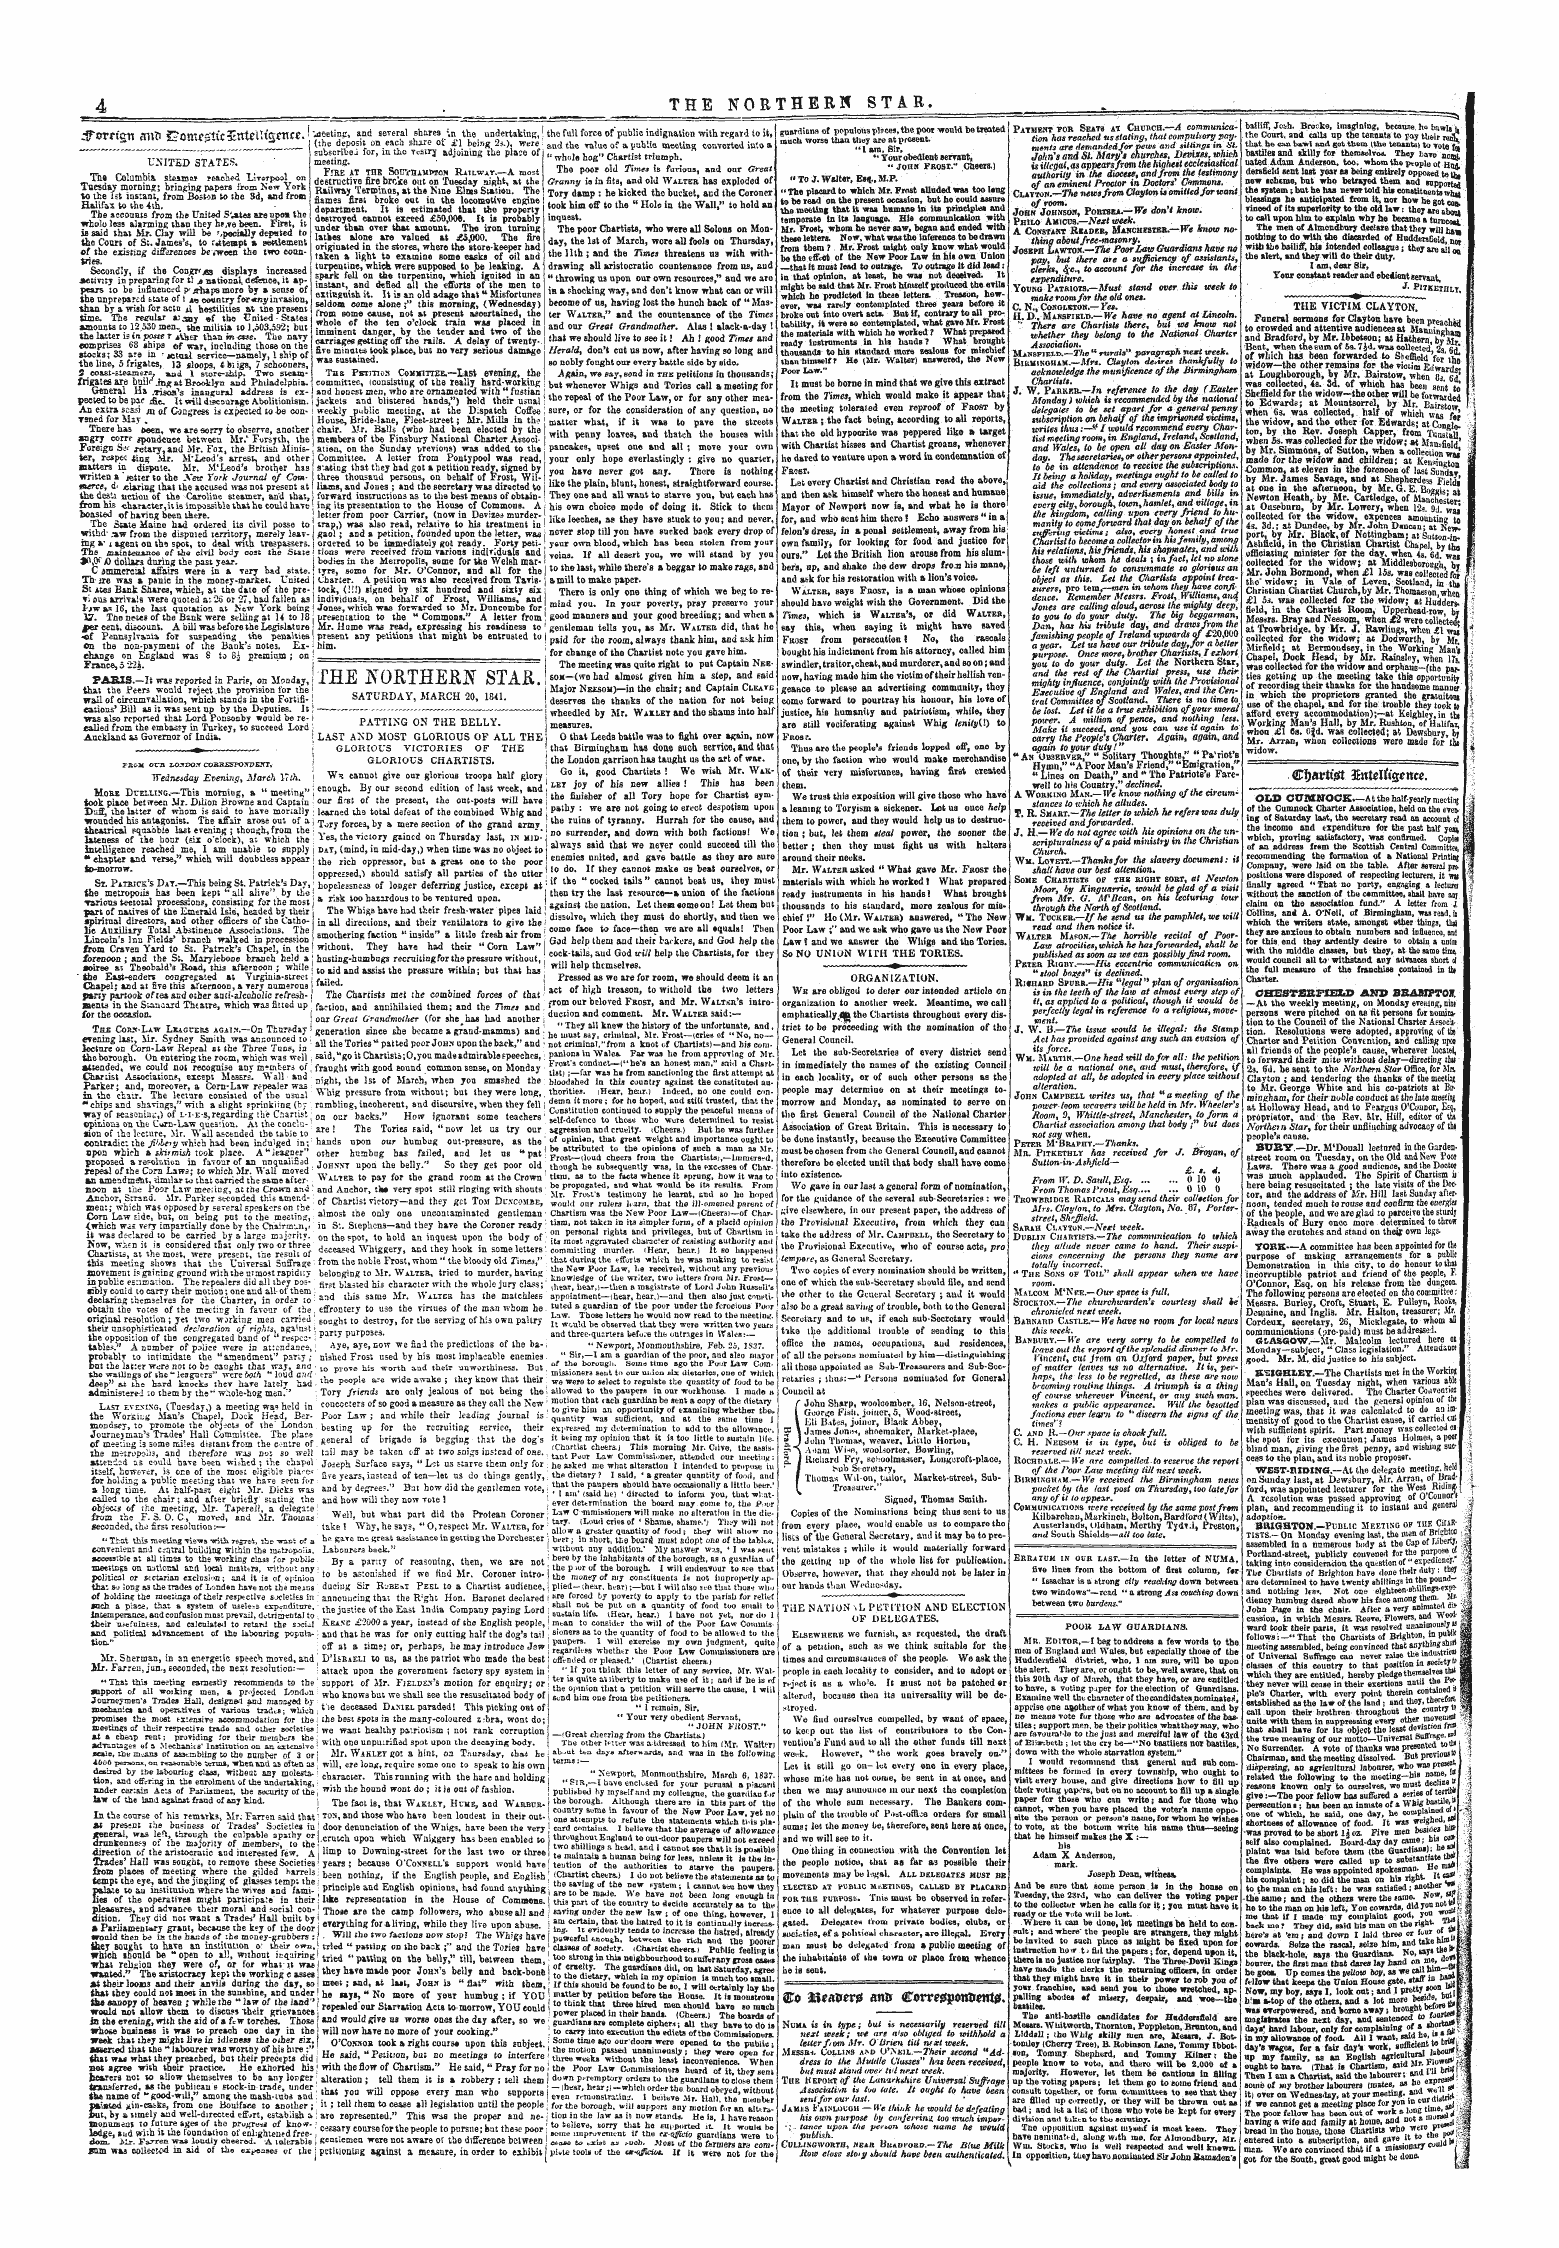 Northern Star (1837-1852): jS F Y, 1st edition - Cftarttet Faxultigctnce.